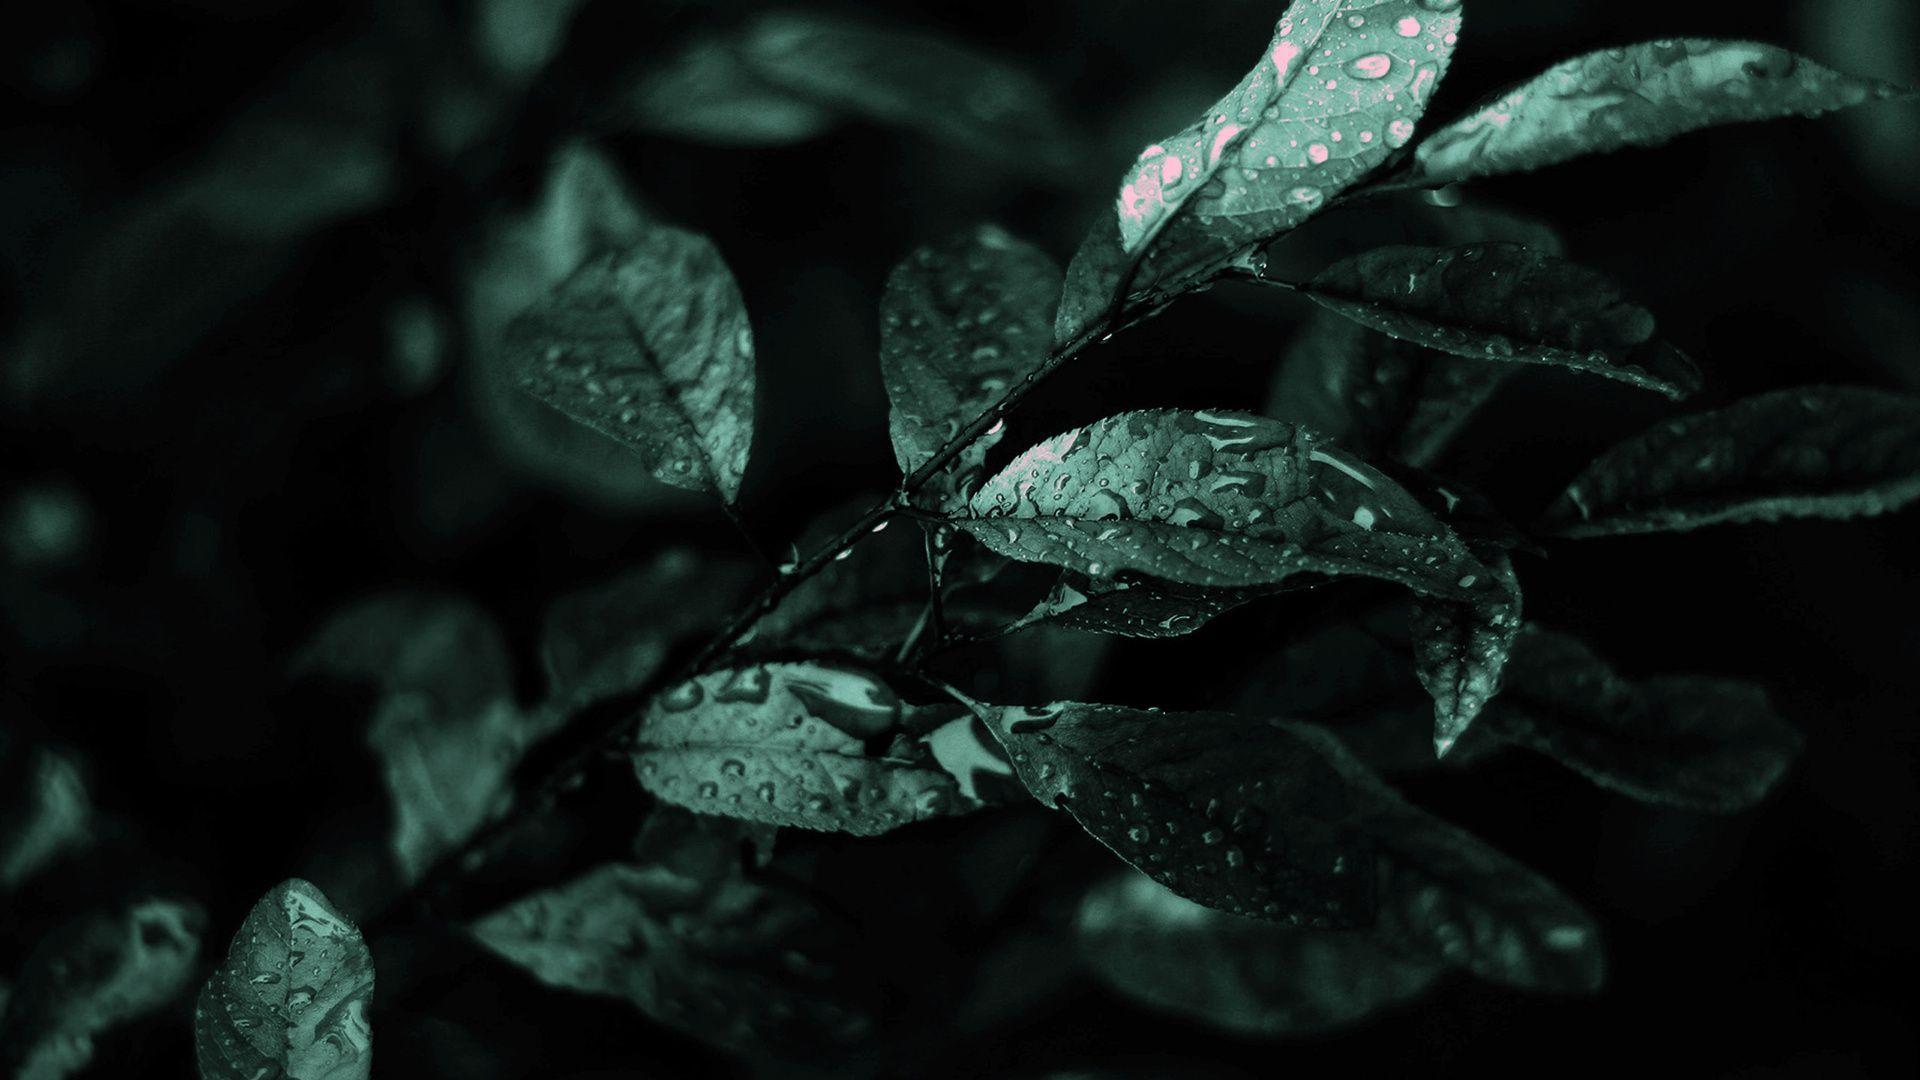 Dark Leaf Wallpapers - Top Free Dark Leaf Backgrounds - WallpaperAccess